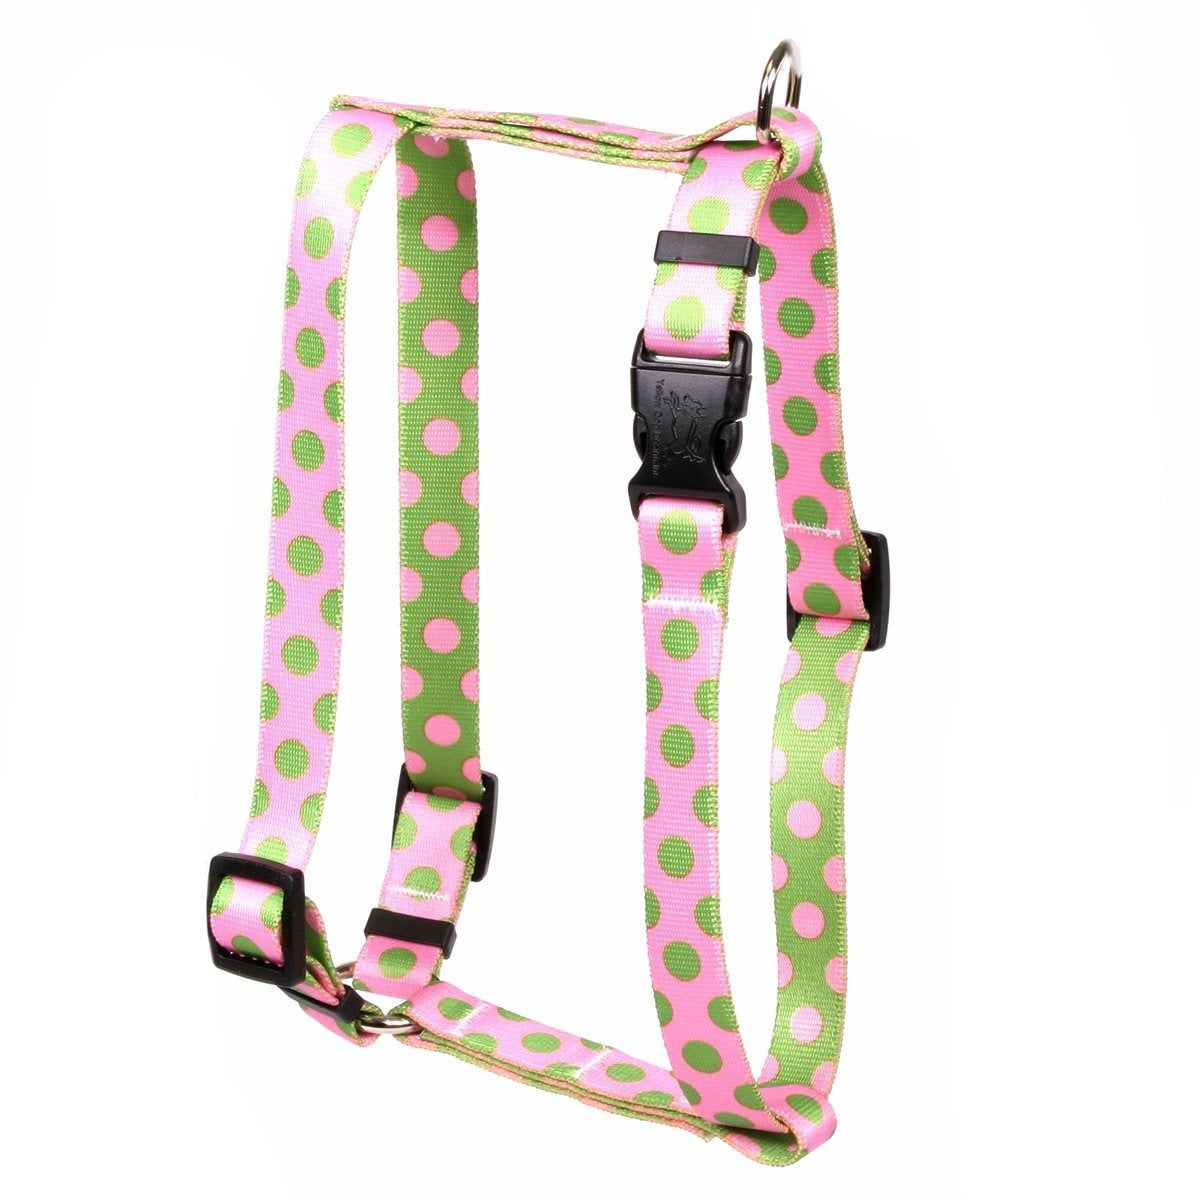 Yellow Dog Design - Roman Dog Harness, Pink and Green Polka Dot